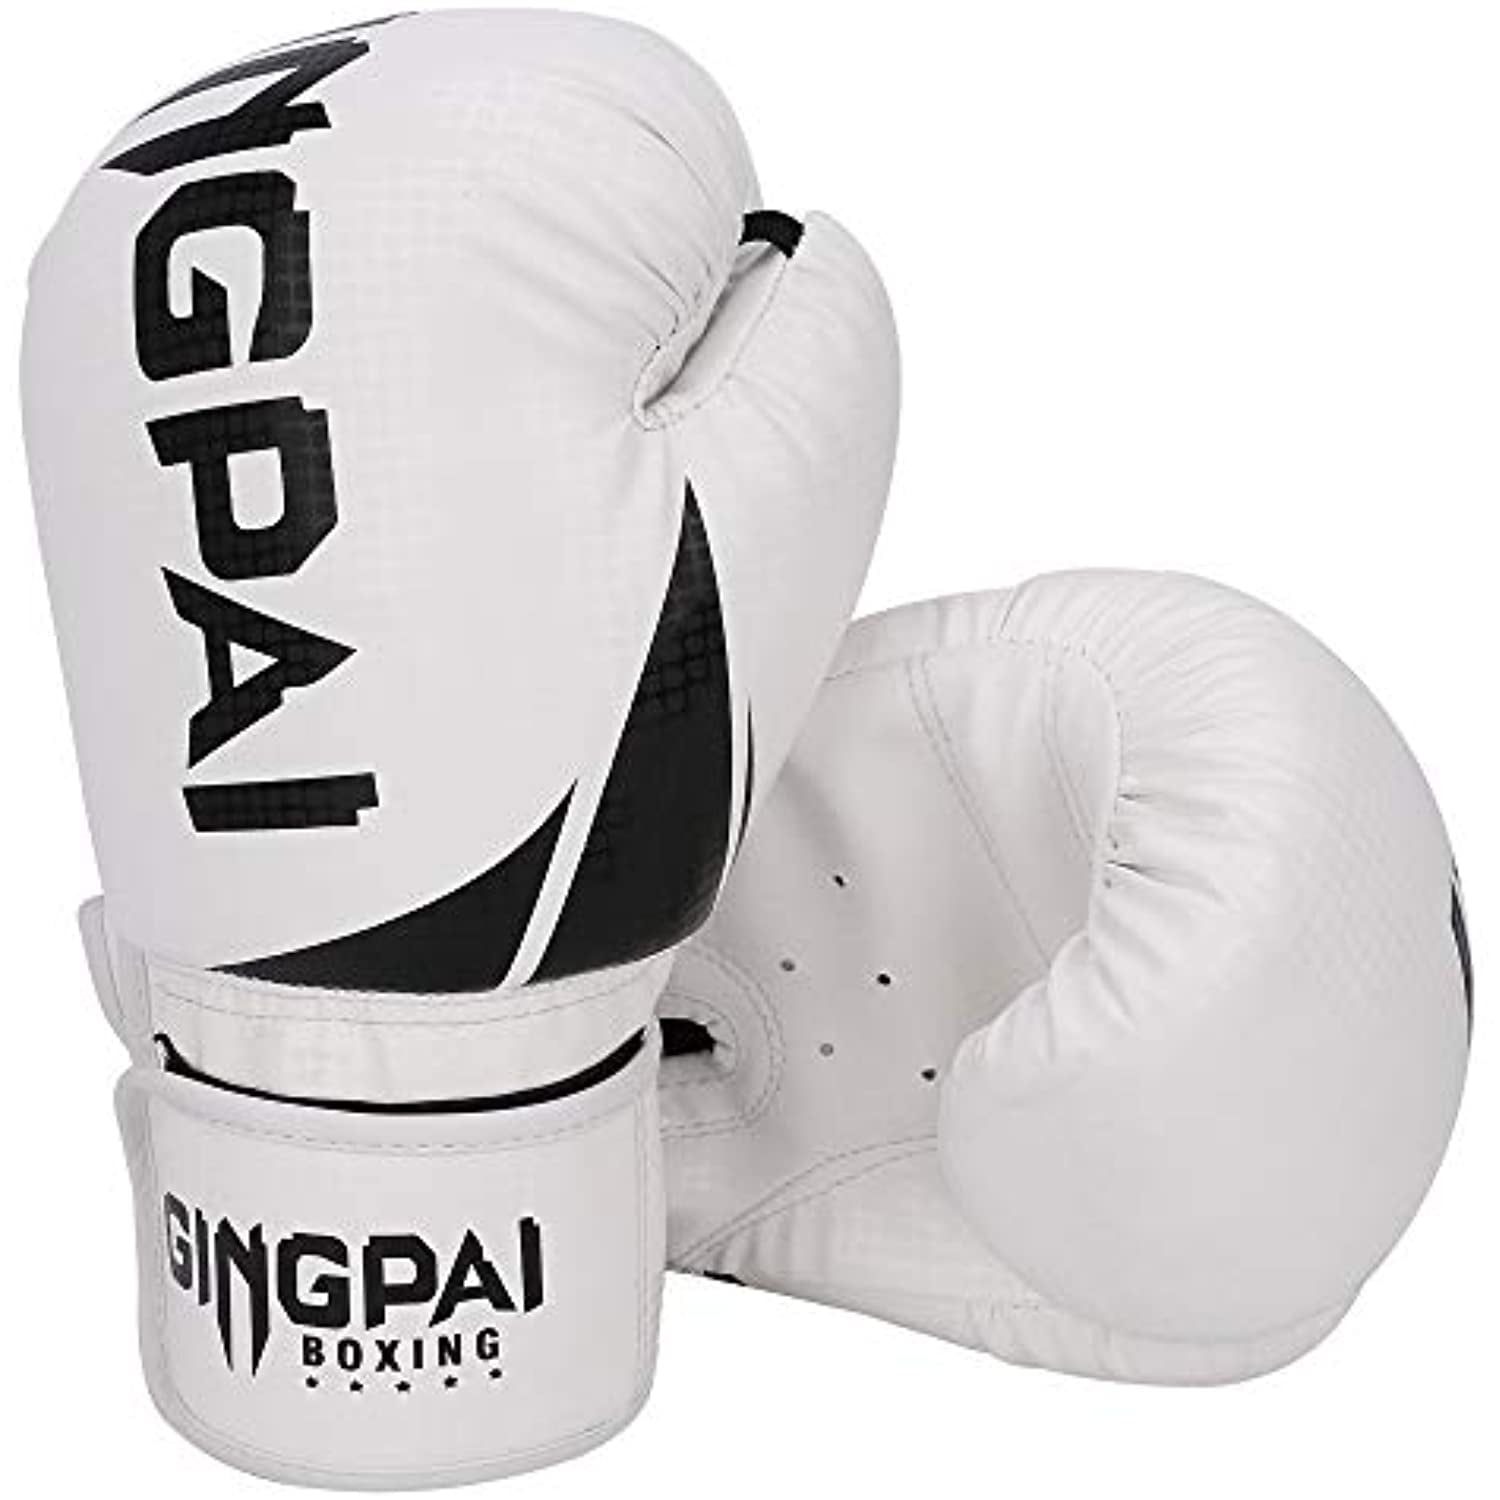 GINGPAI Boxing Gloves for Kids Men Women,MMA Punching Heavy Bag Kickboxing Muay Thai Sparring Fighting Training Gloves 